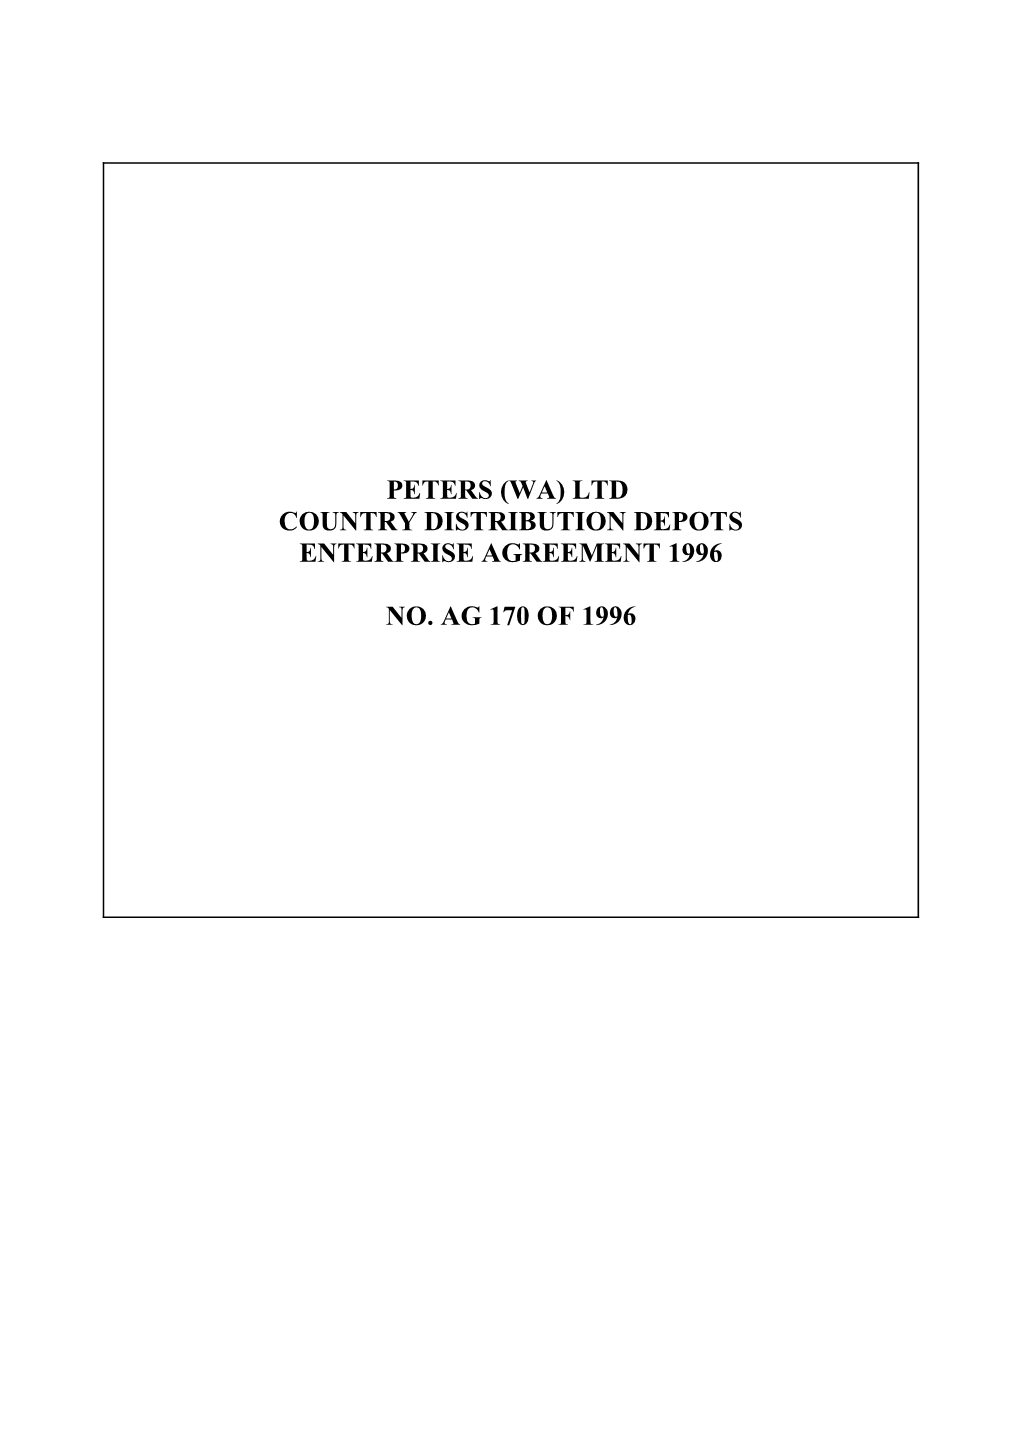 Peters (WA) Ltd Country Distribution Depots (Enterprise Bargaining) Agreement 1996, No